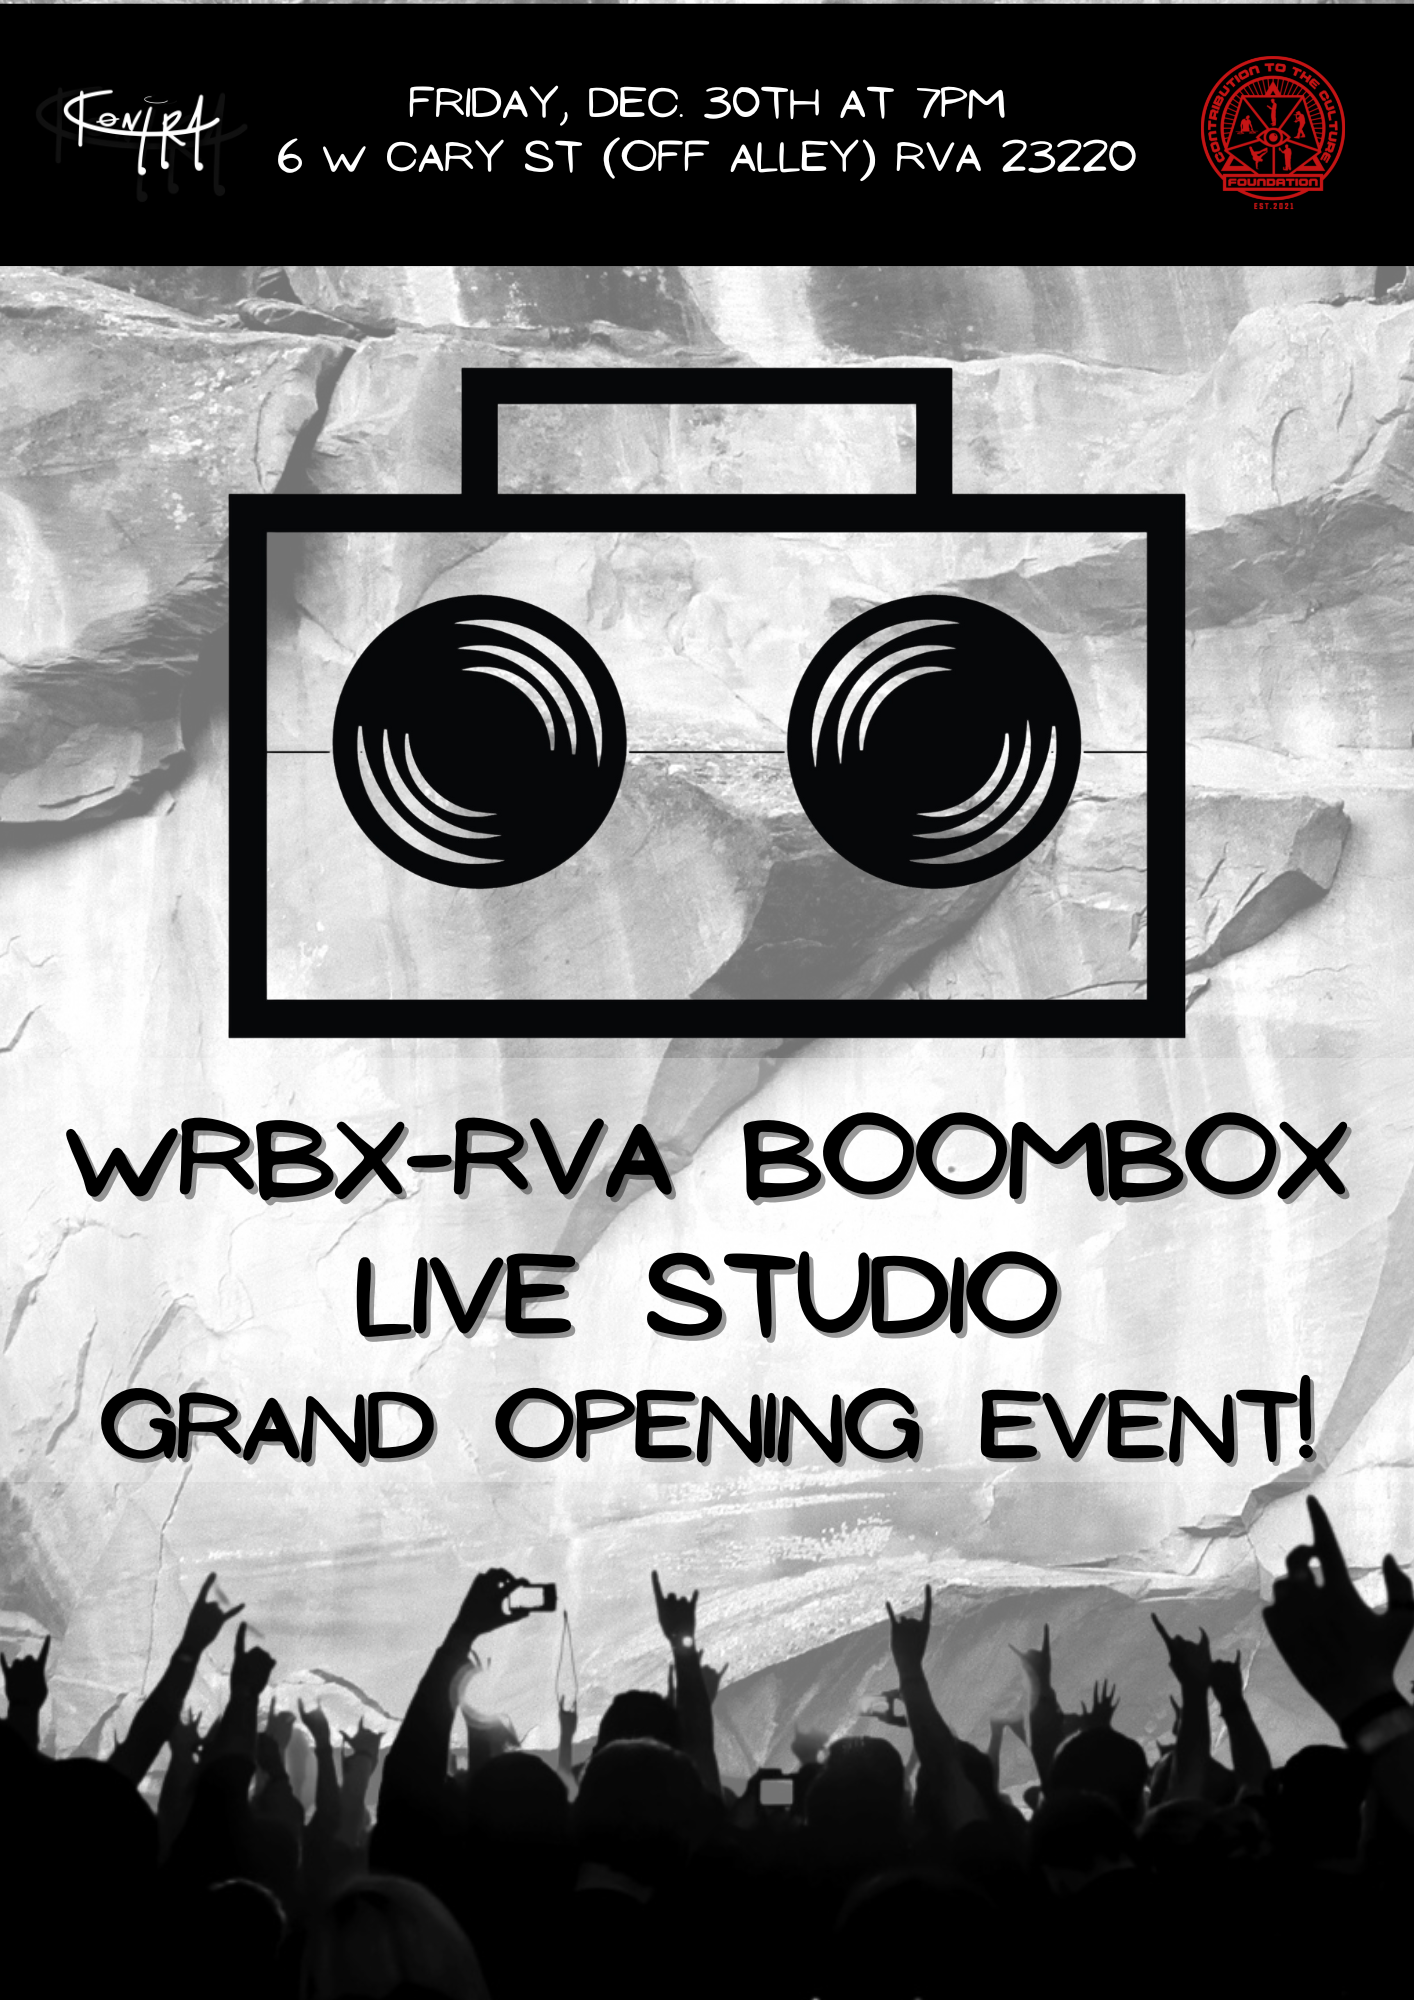 WRBX-RVA Boombox Live Broadcast Studio Grand Opening on Dec 31, 20:00@WRBX-RVA Boombox Live Broadcast Studio - Buy tickets and Get information on WRBX-RVA Boombox 